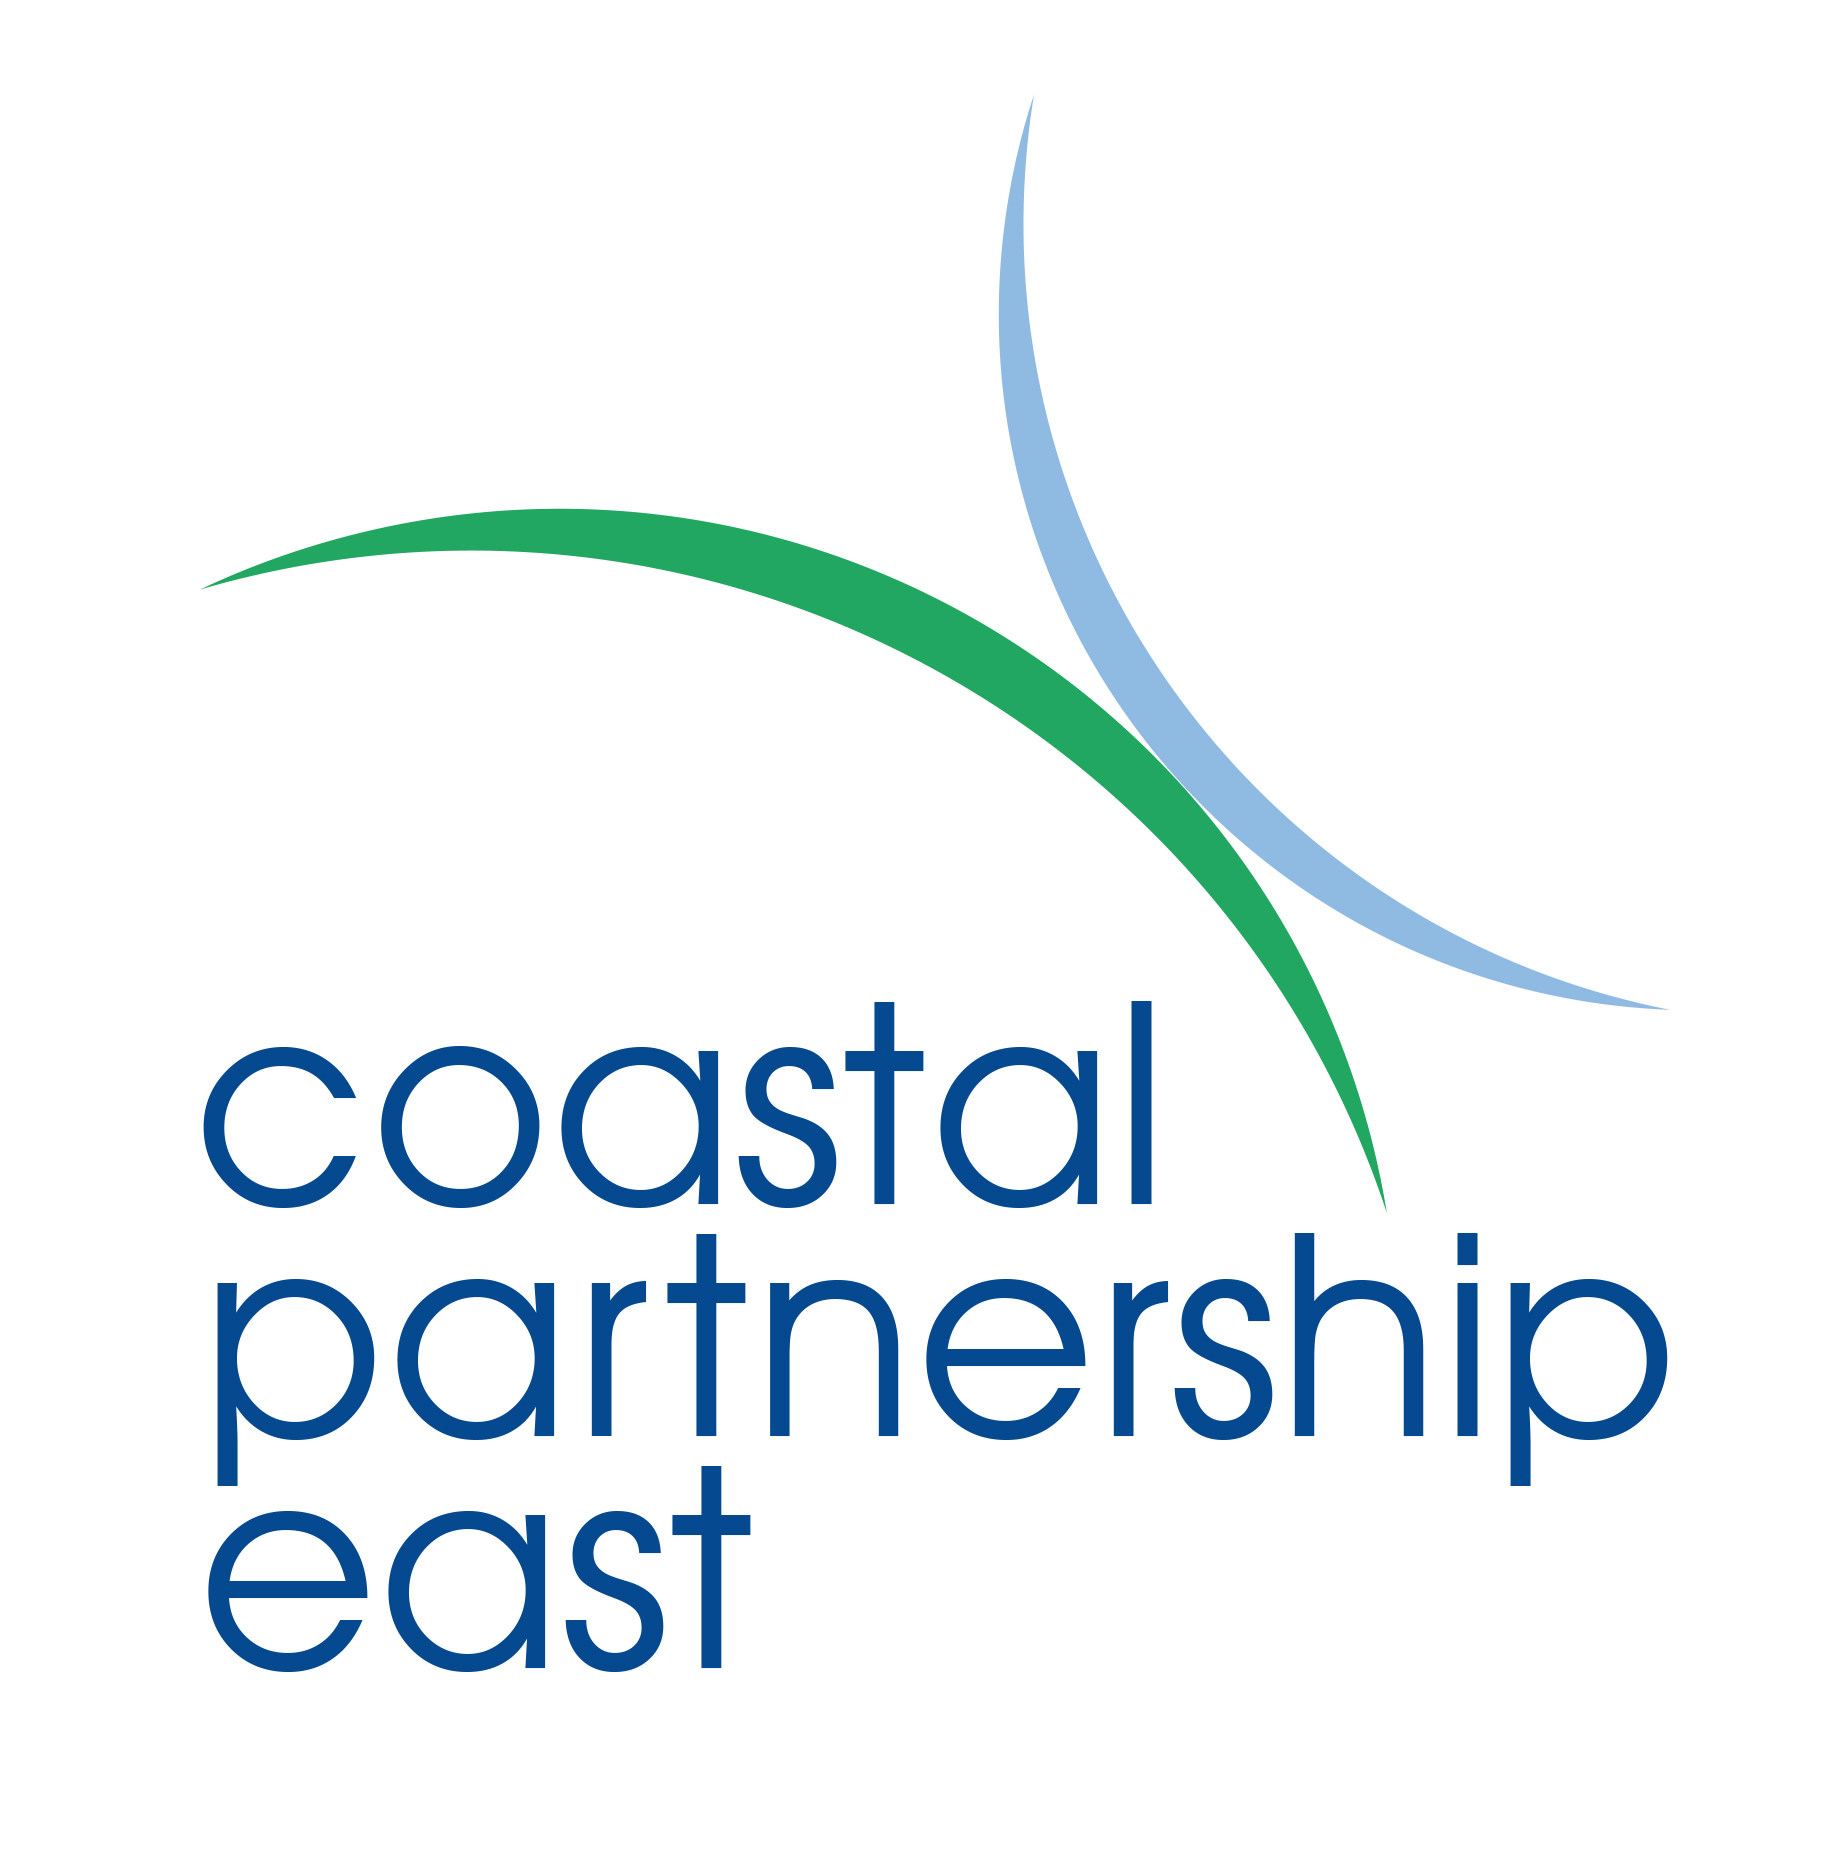 Coastal Partnership East